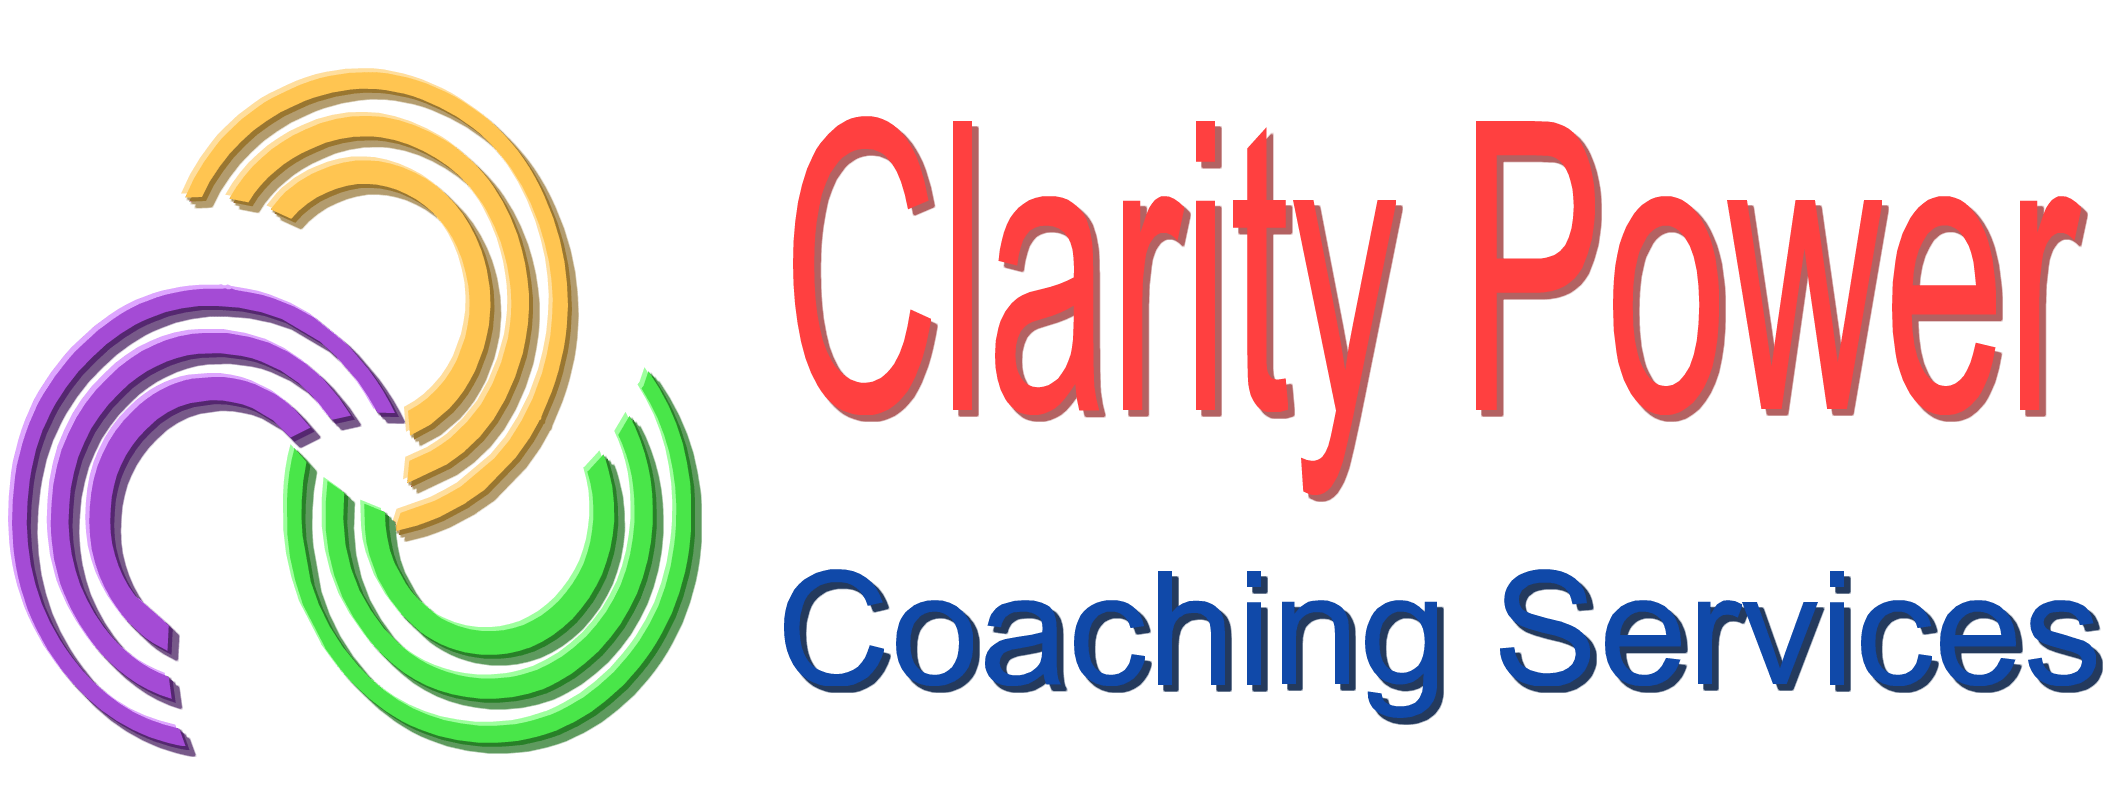 clarity power coaching services logo v6